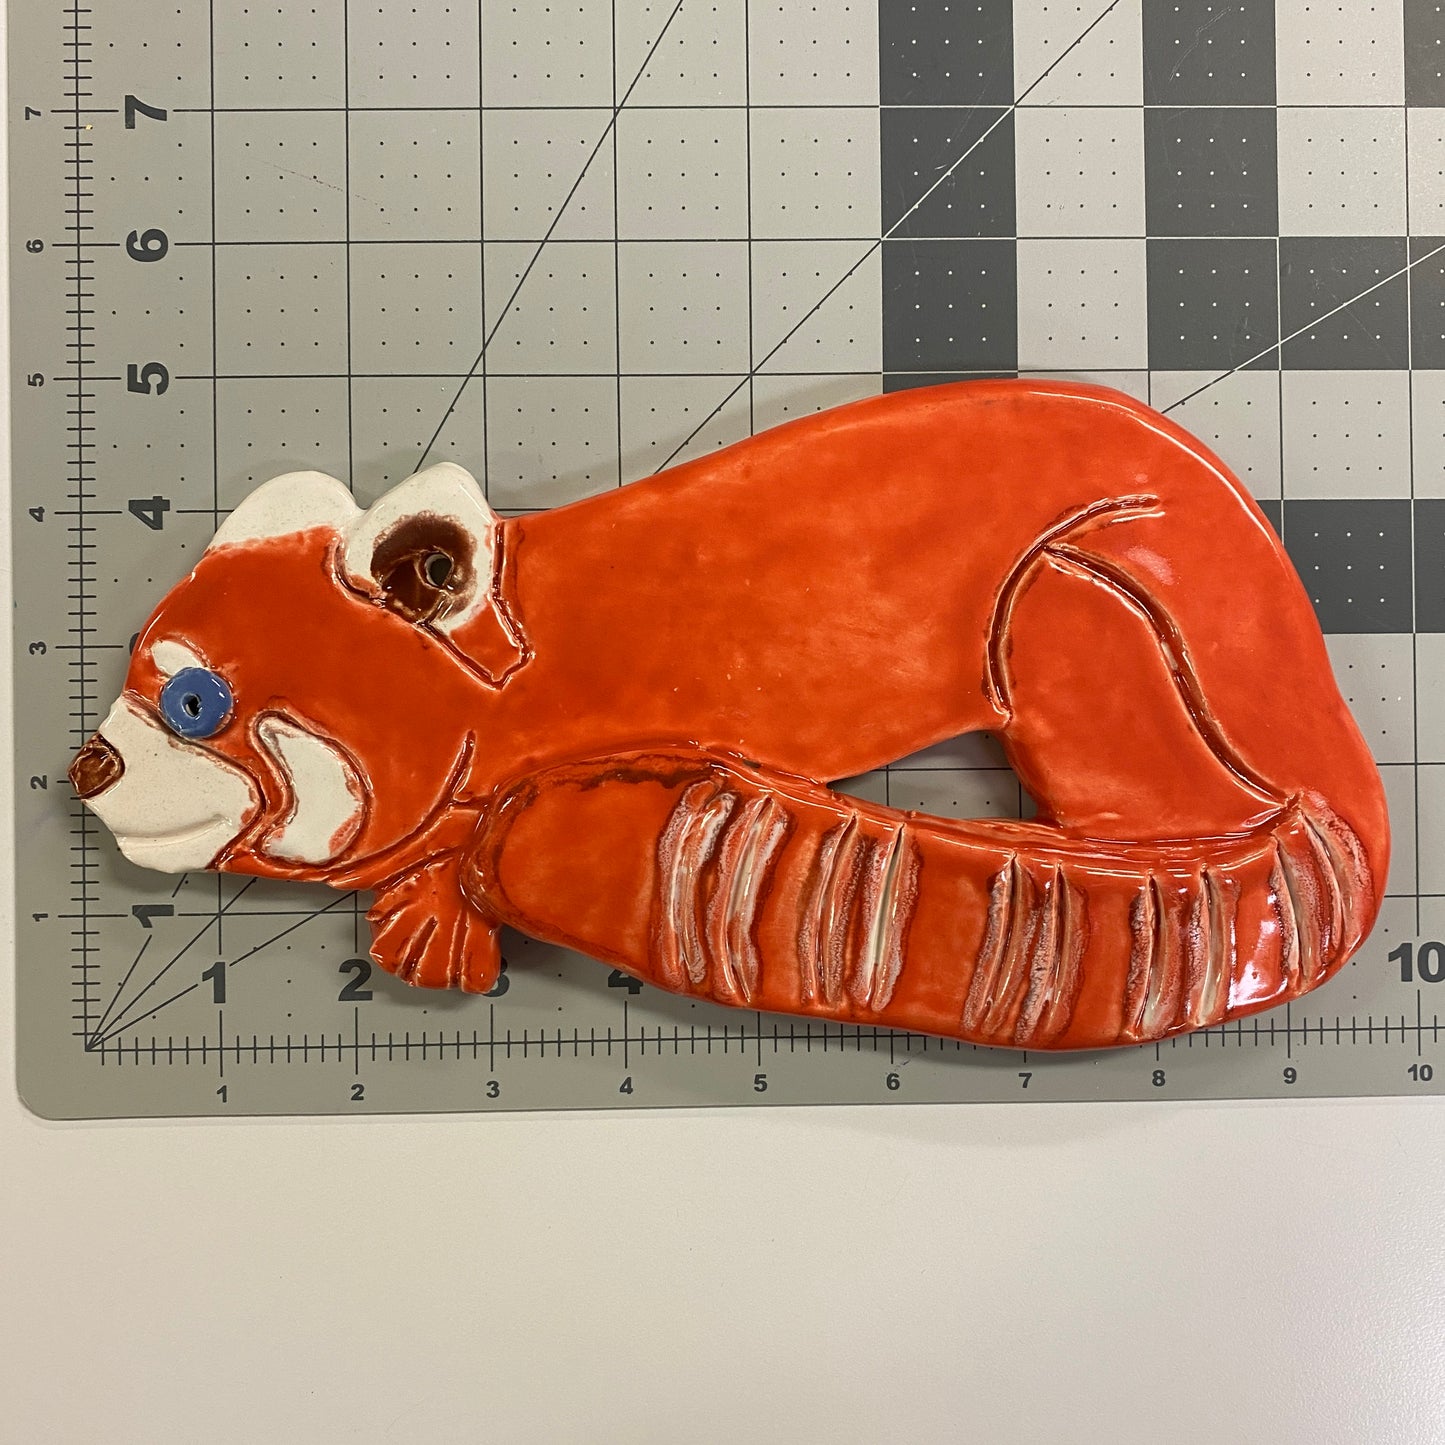 Ceramic Arts Handmade Clay Crafts Glazed 10-inch x 5-inch Red Panda made by Lisa Uptain